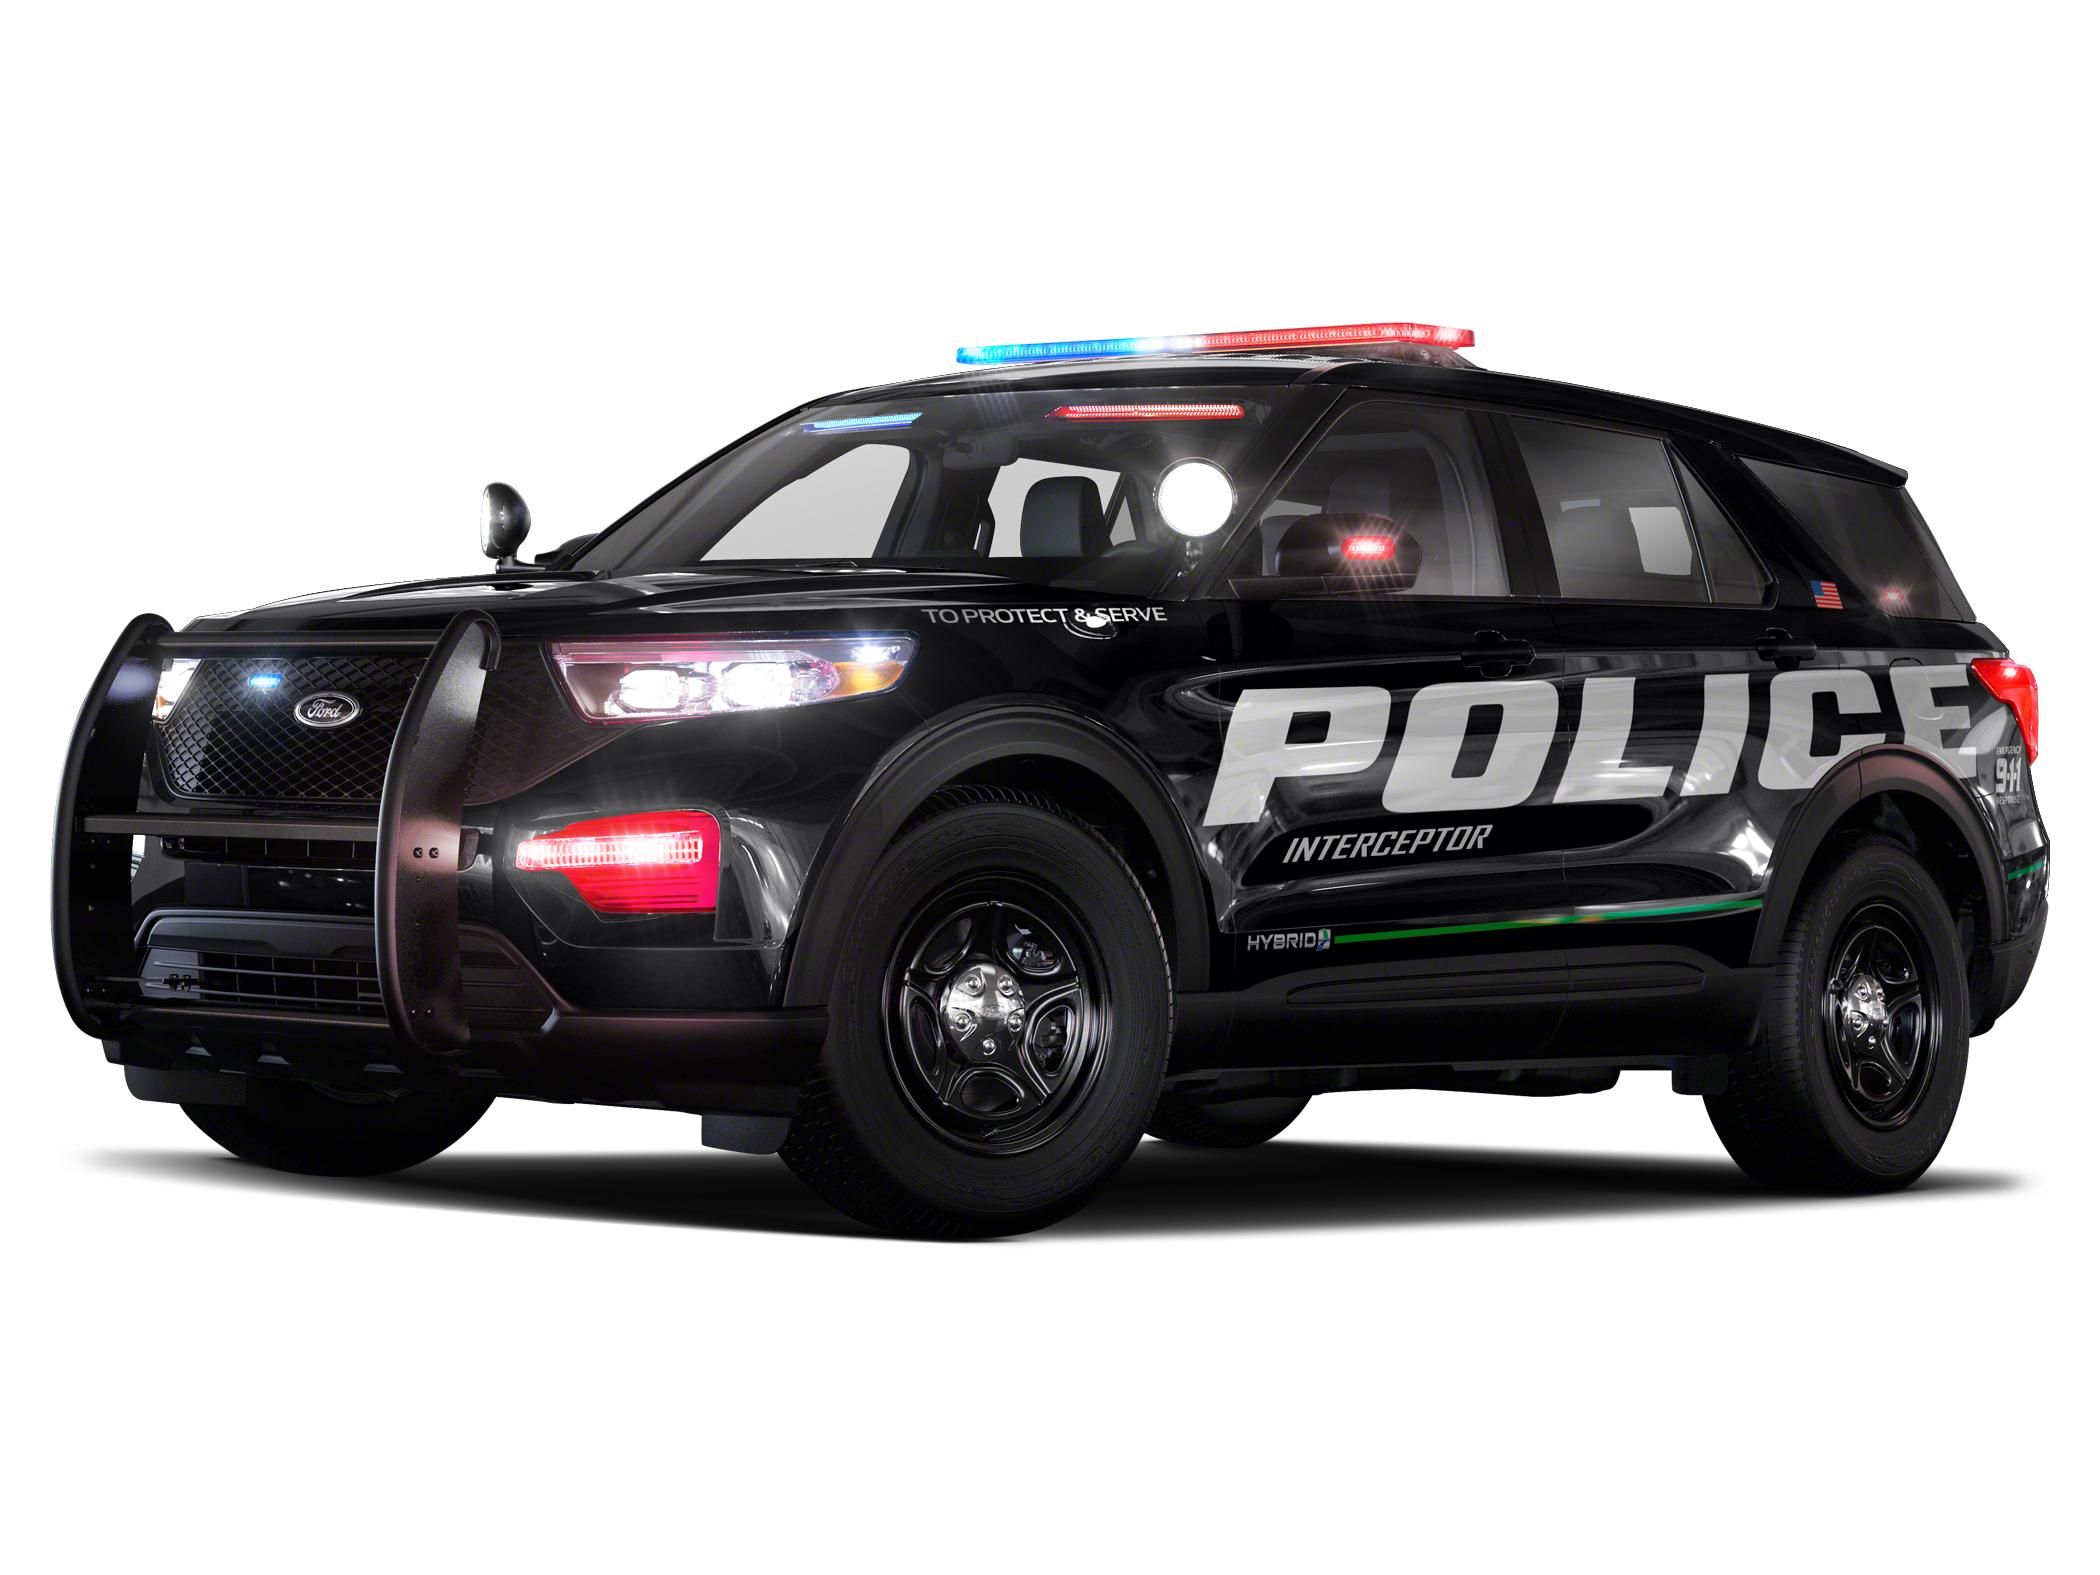 2022 Ford Police Interceptor